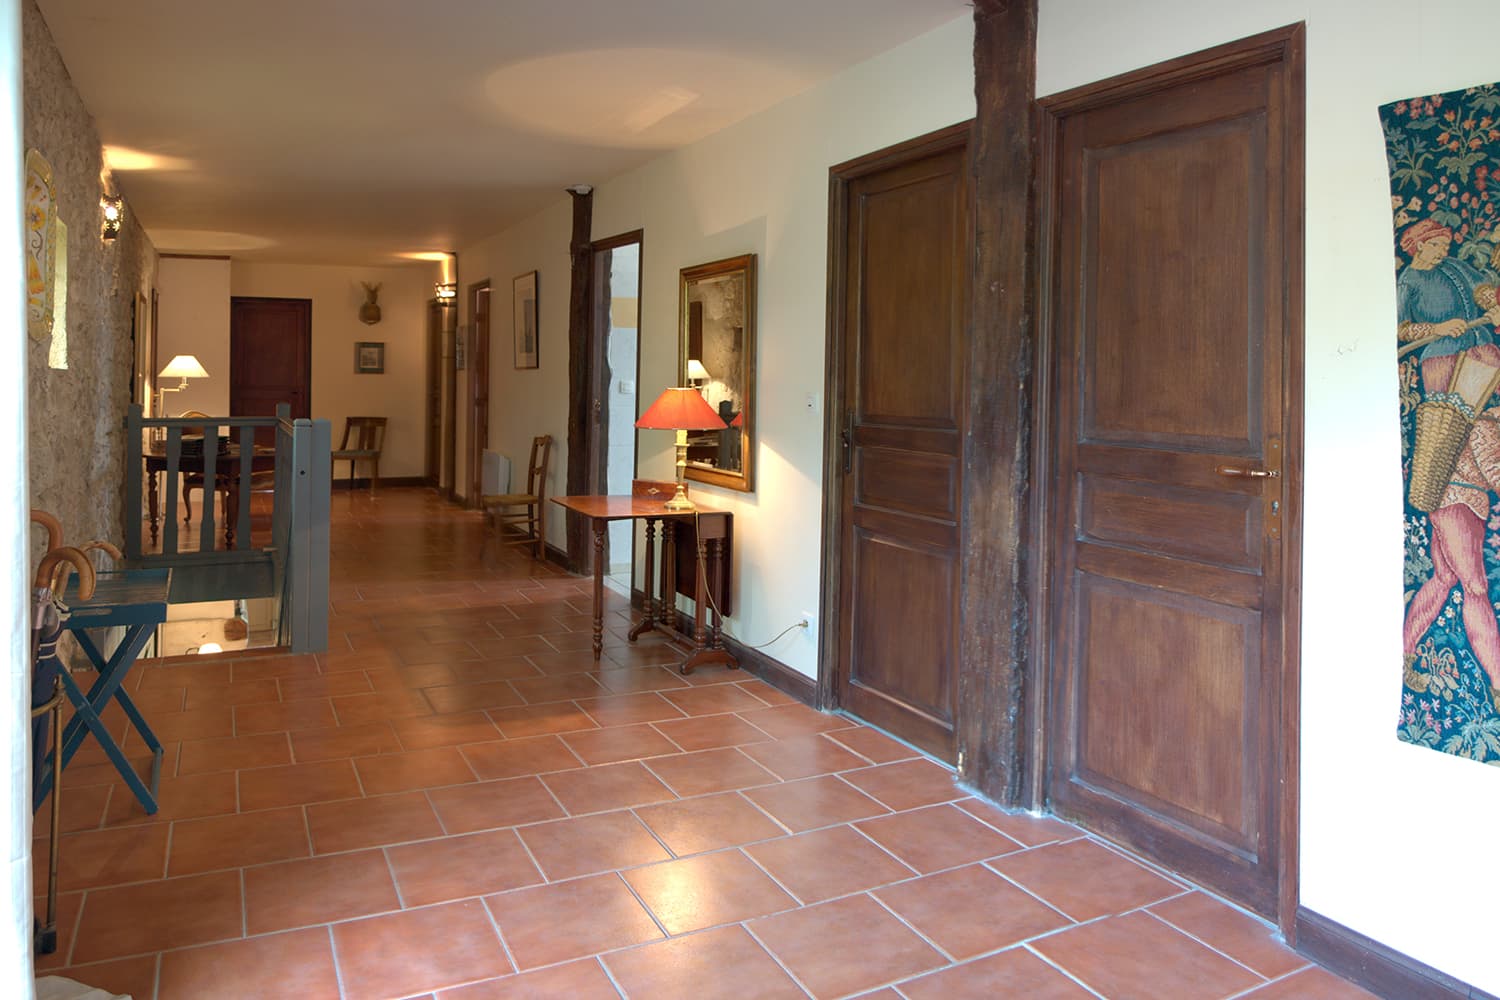 Hallway | South West France rental home